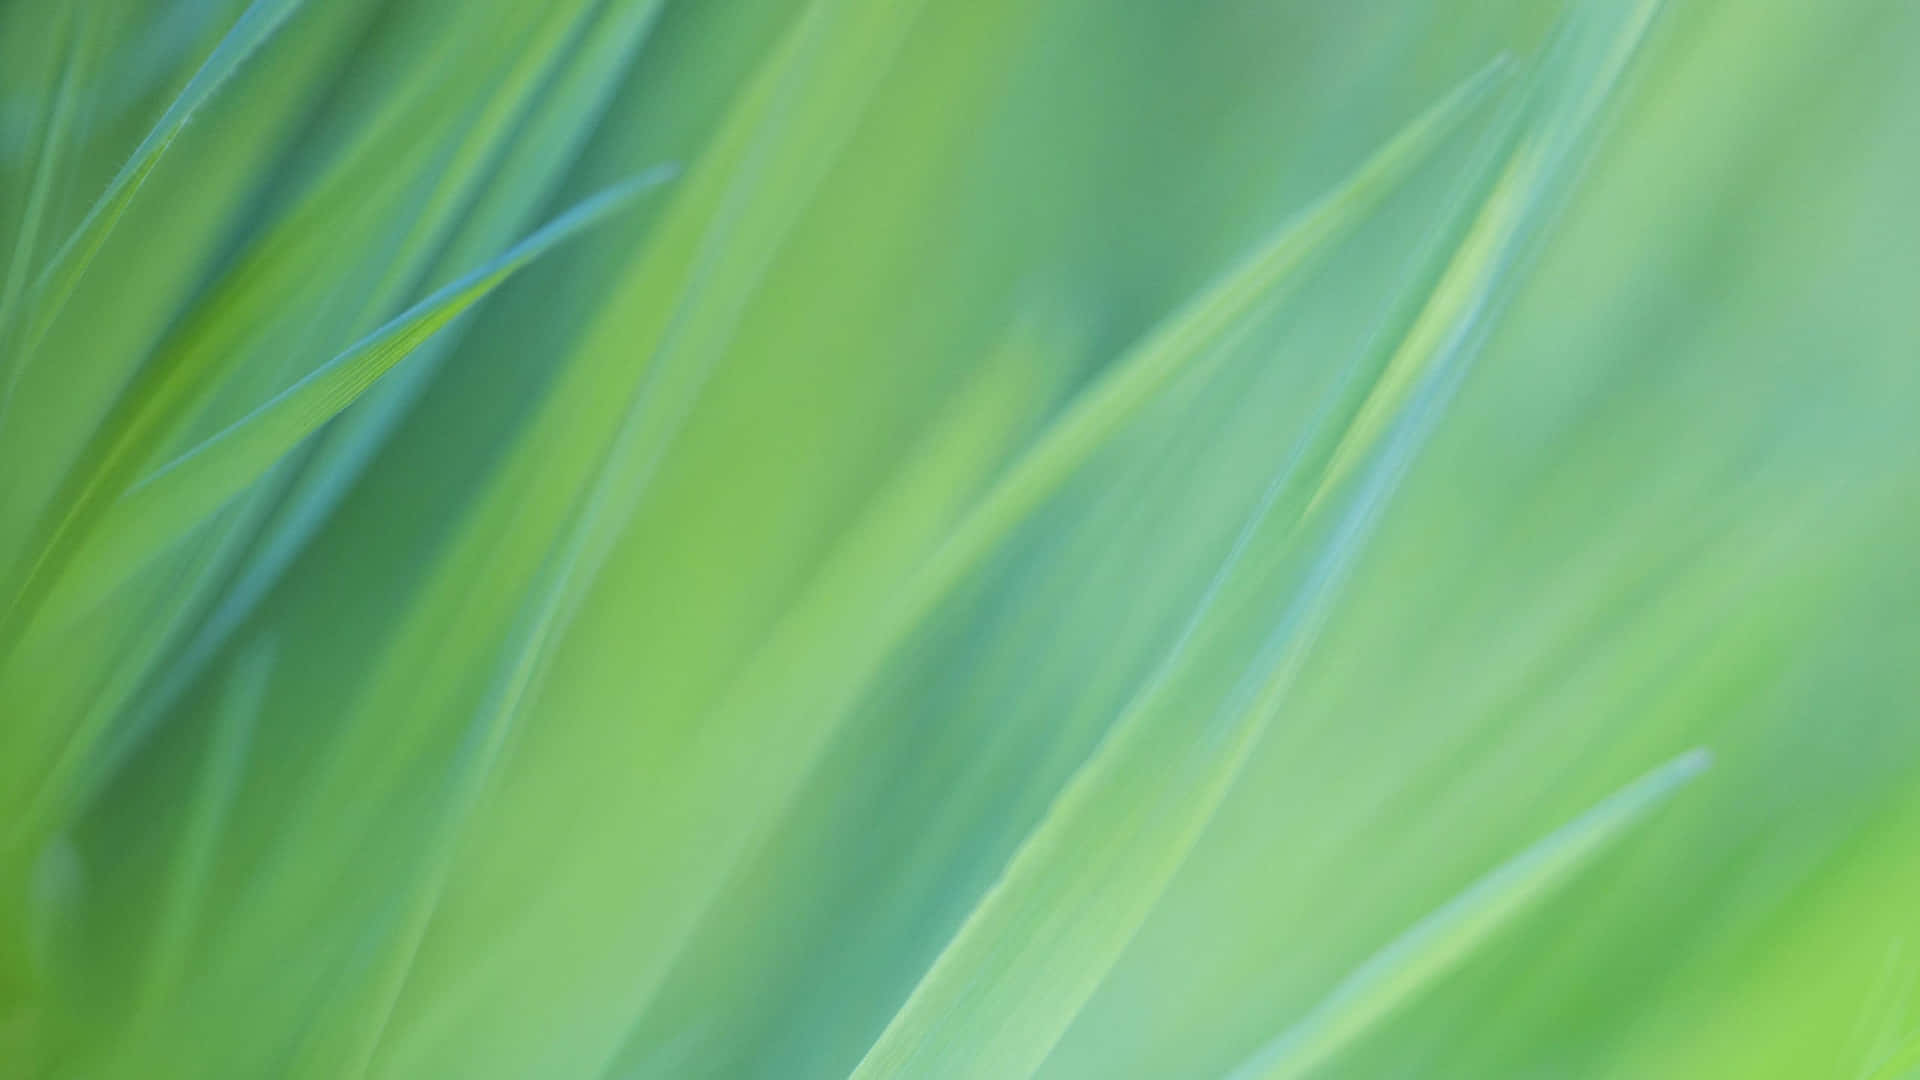 Green Grass In Motion Wallpaper